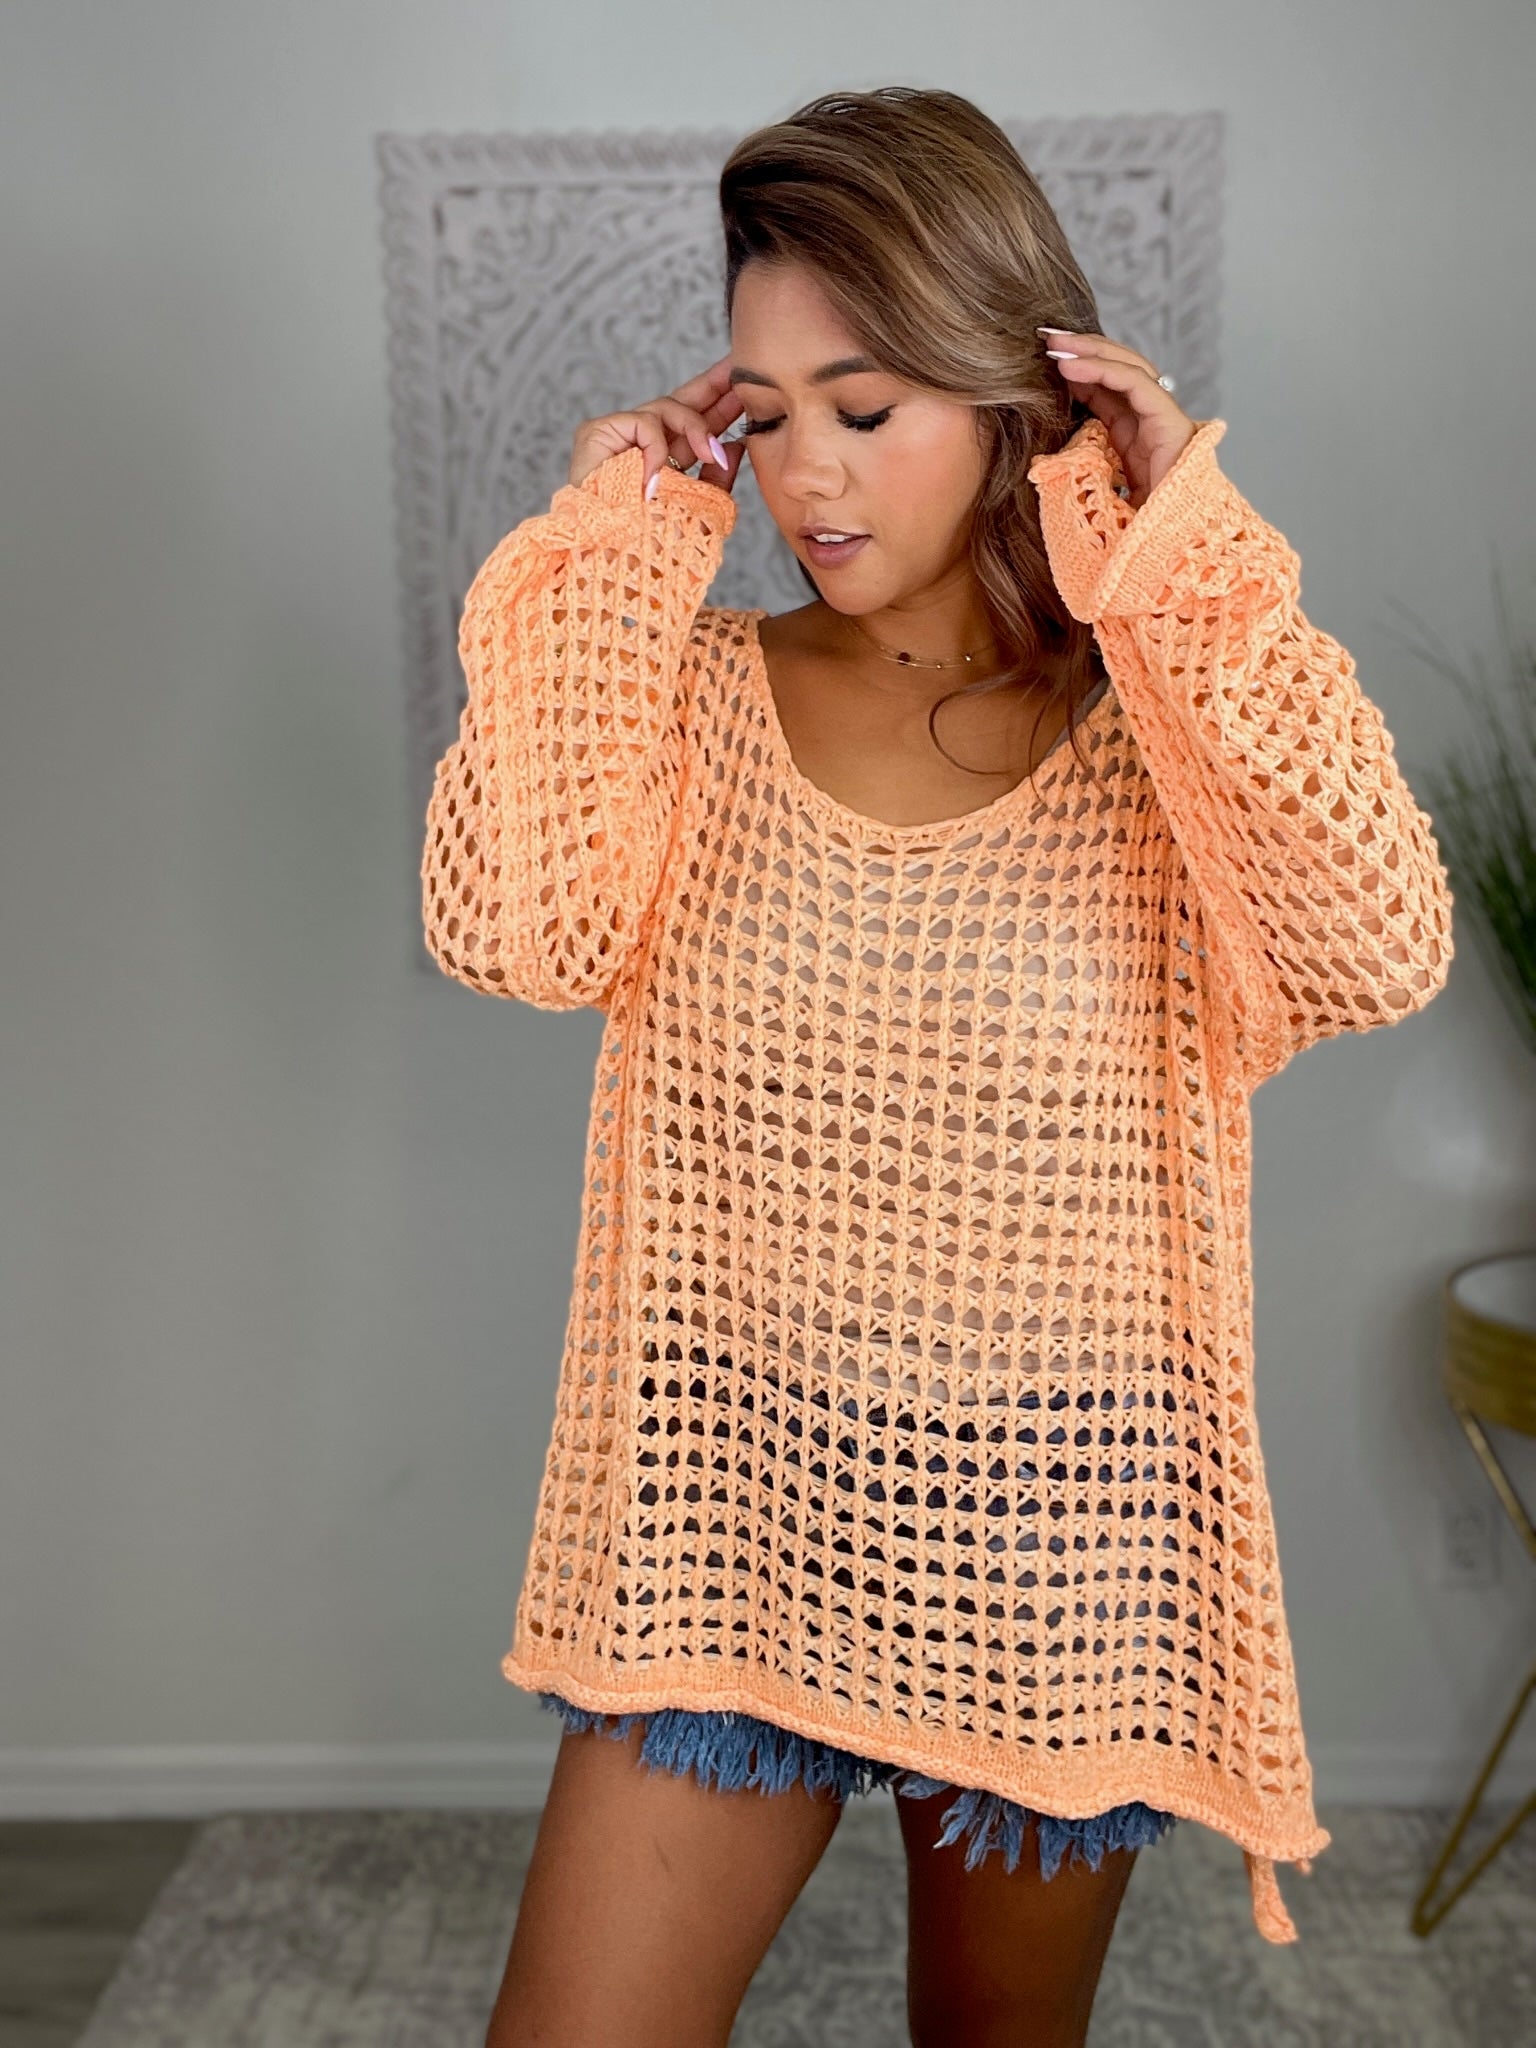 The Orange Crochet Summer Sweater